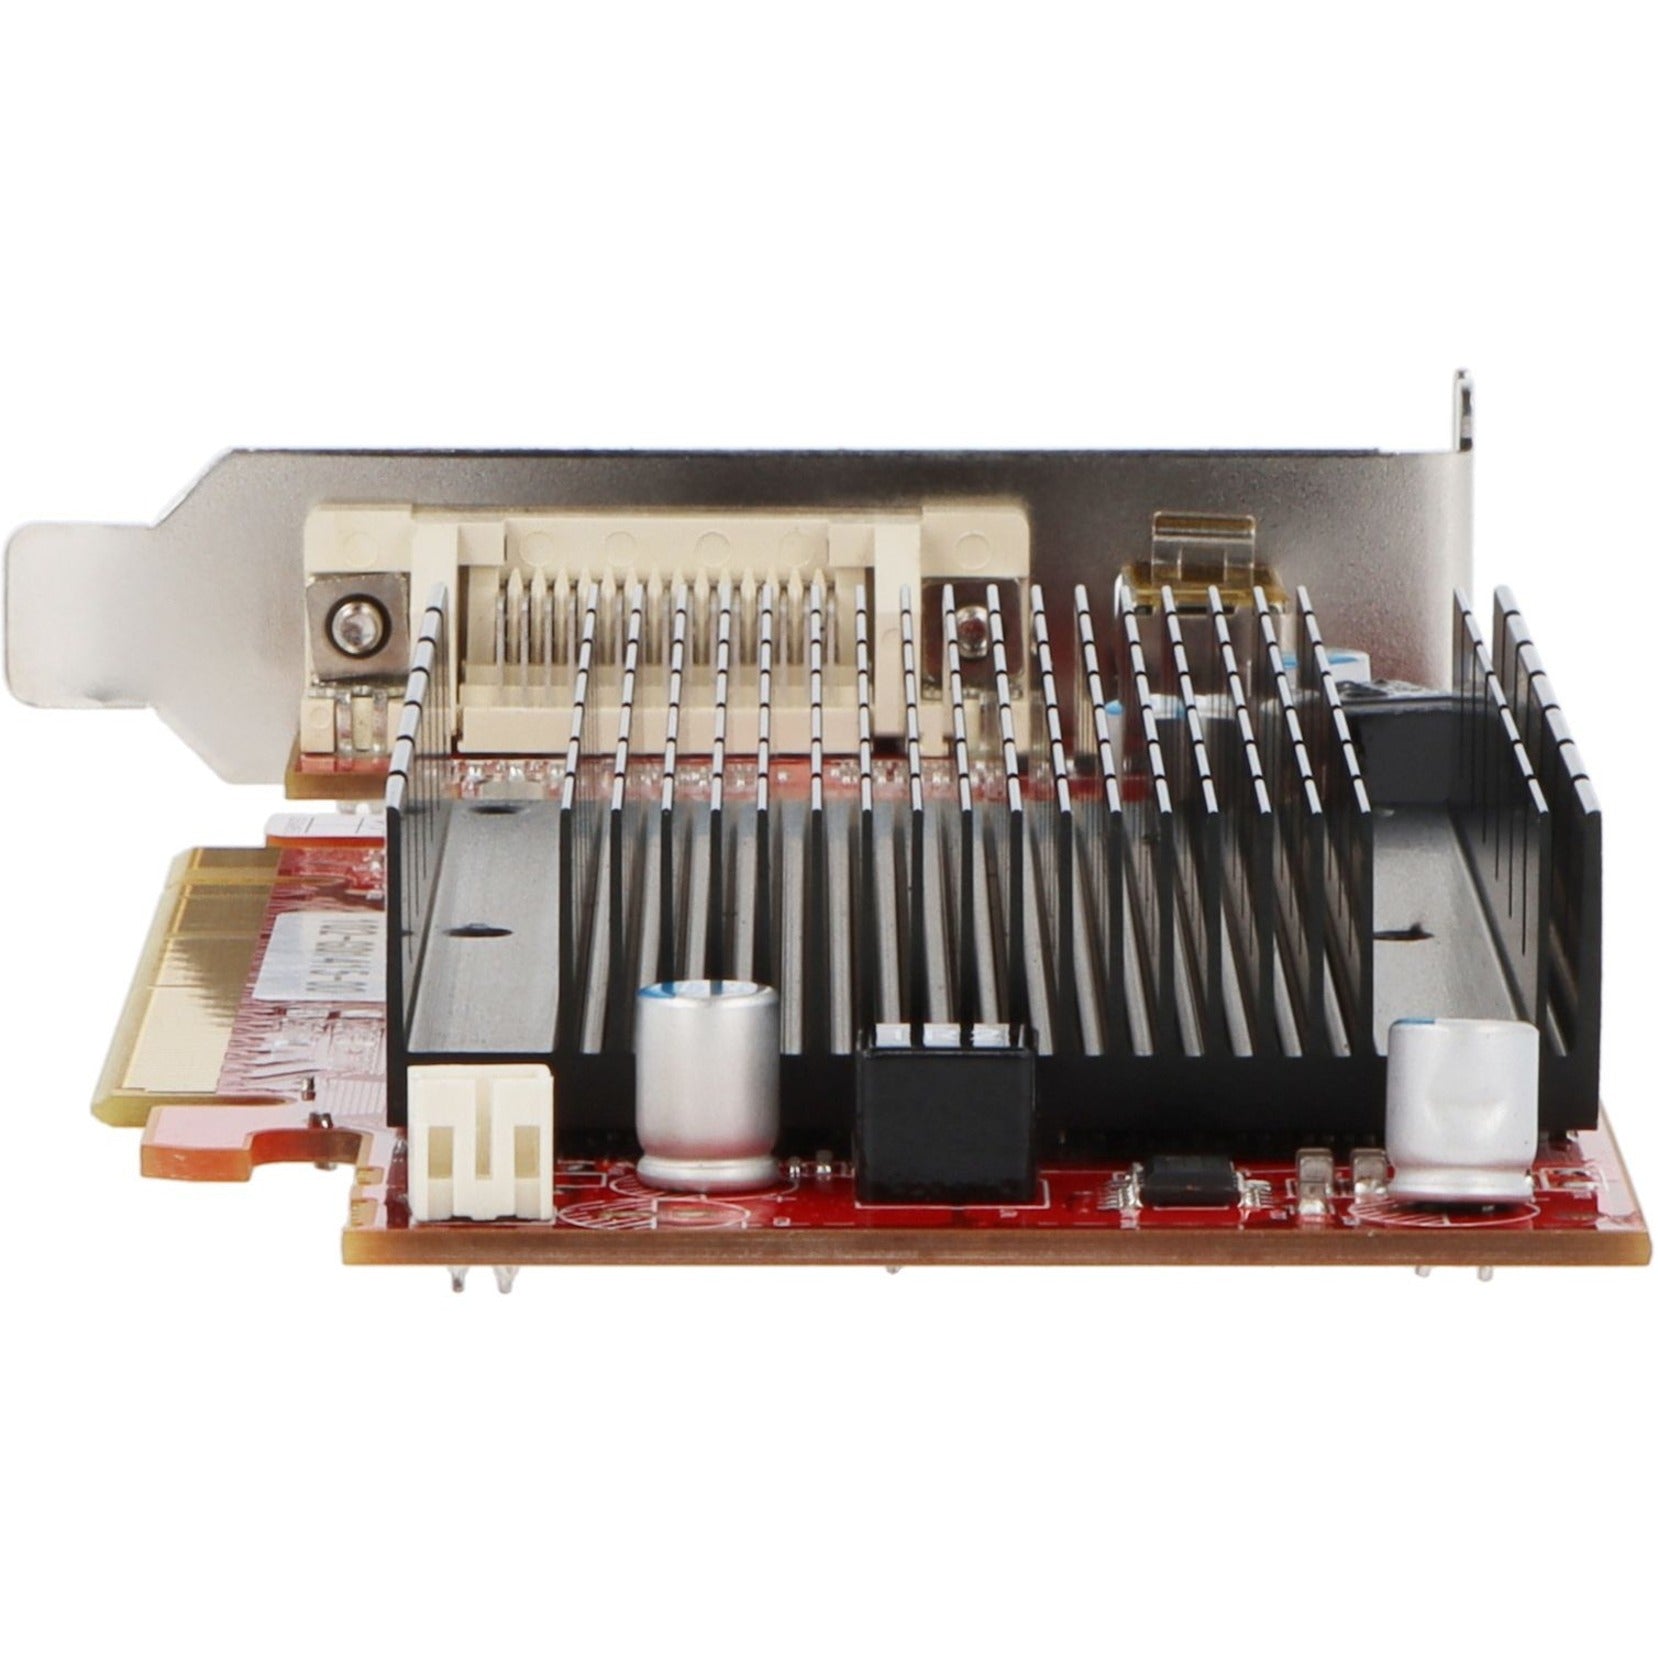 VisionTek 900456 Radeon HD 6350 Graphic Card, 1GB DDR3, Dual DVI-D/VGA, DirectX 11.0